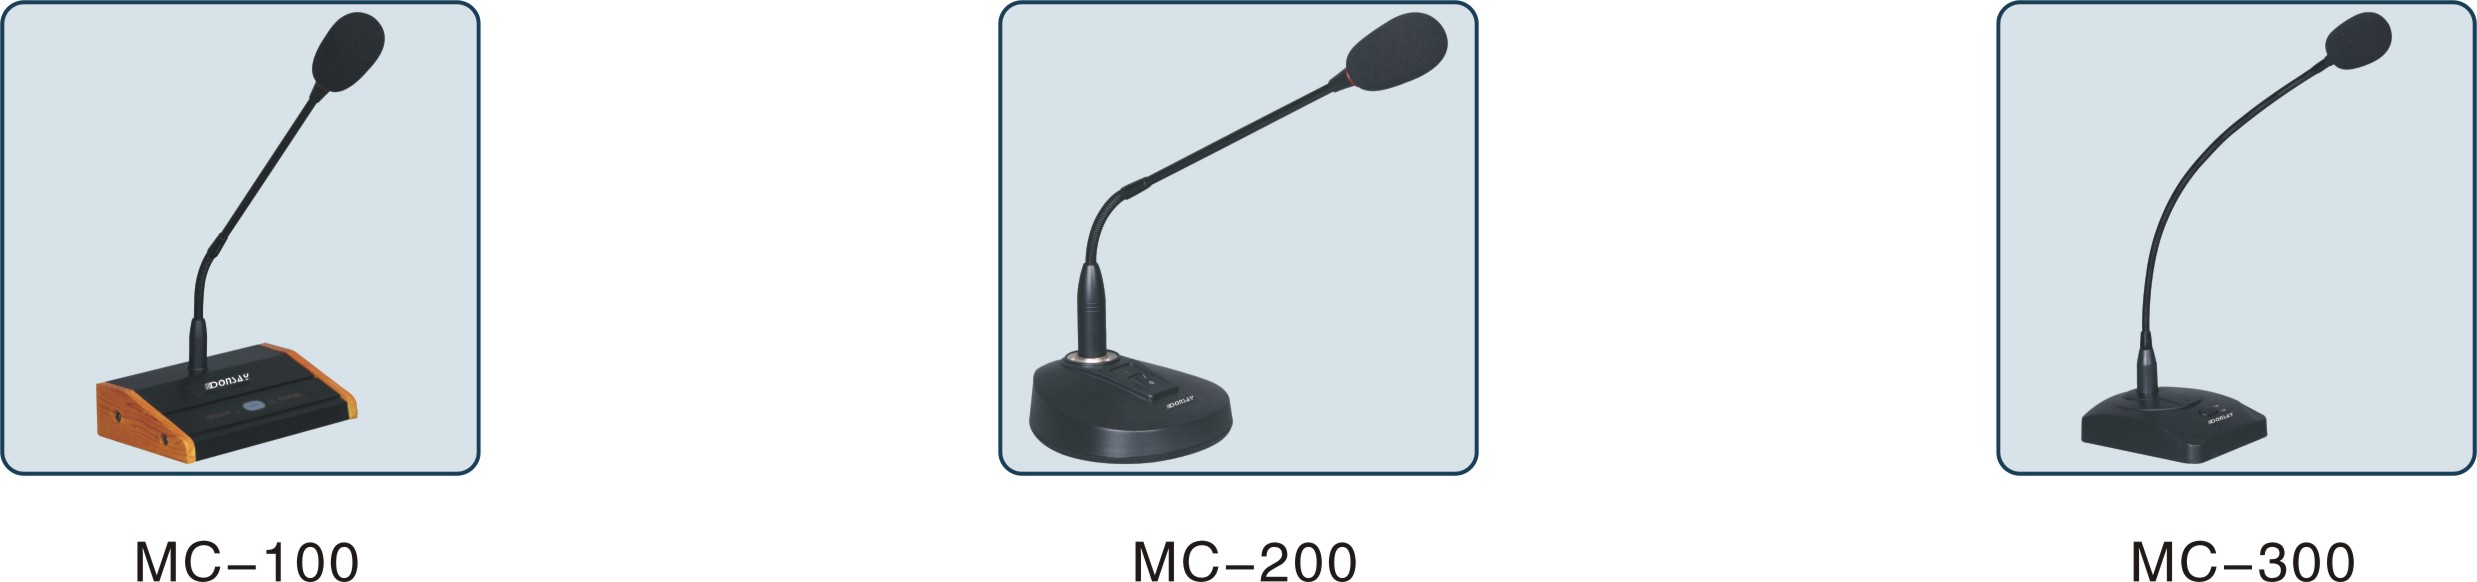 mc-100-300.jpg